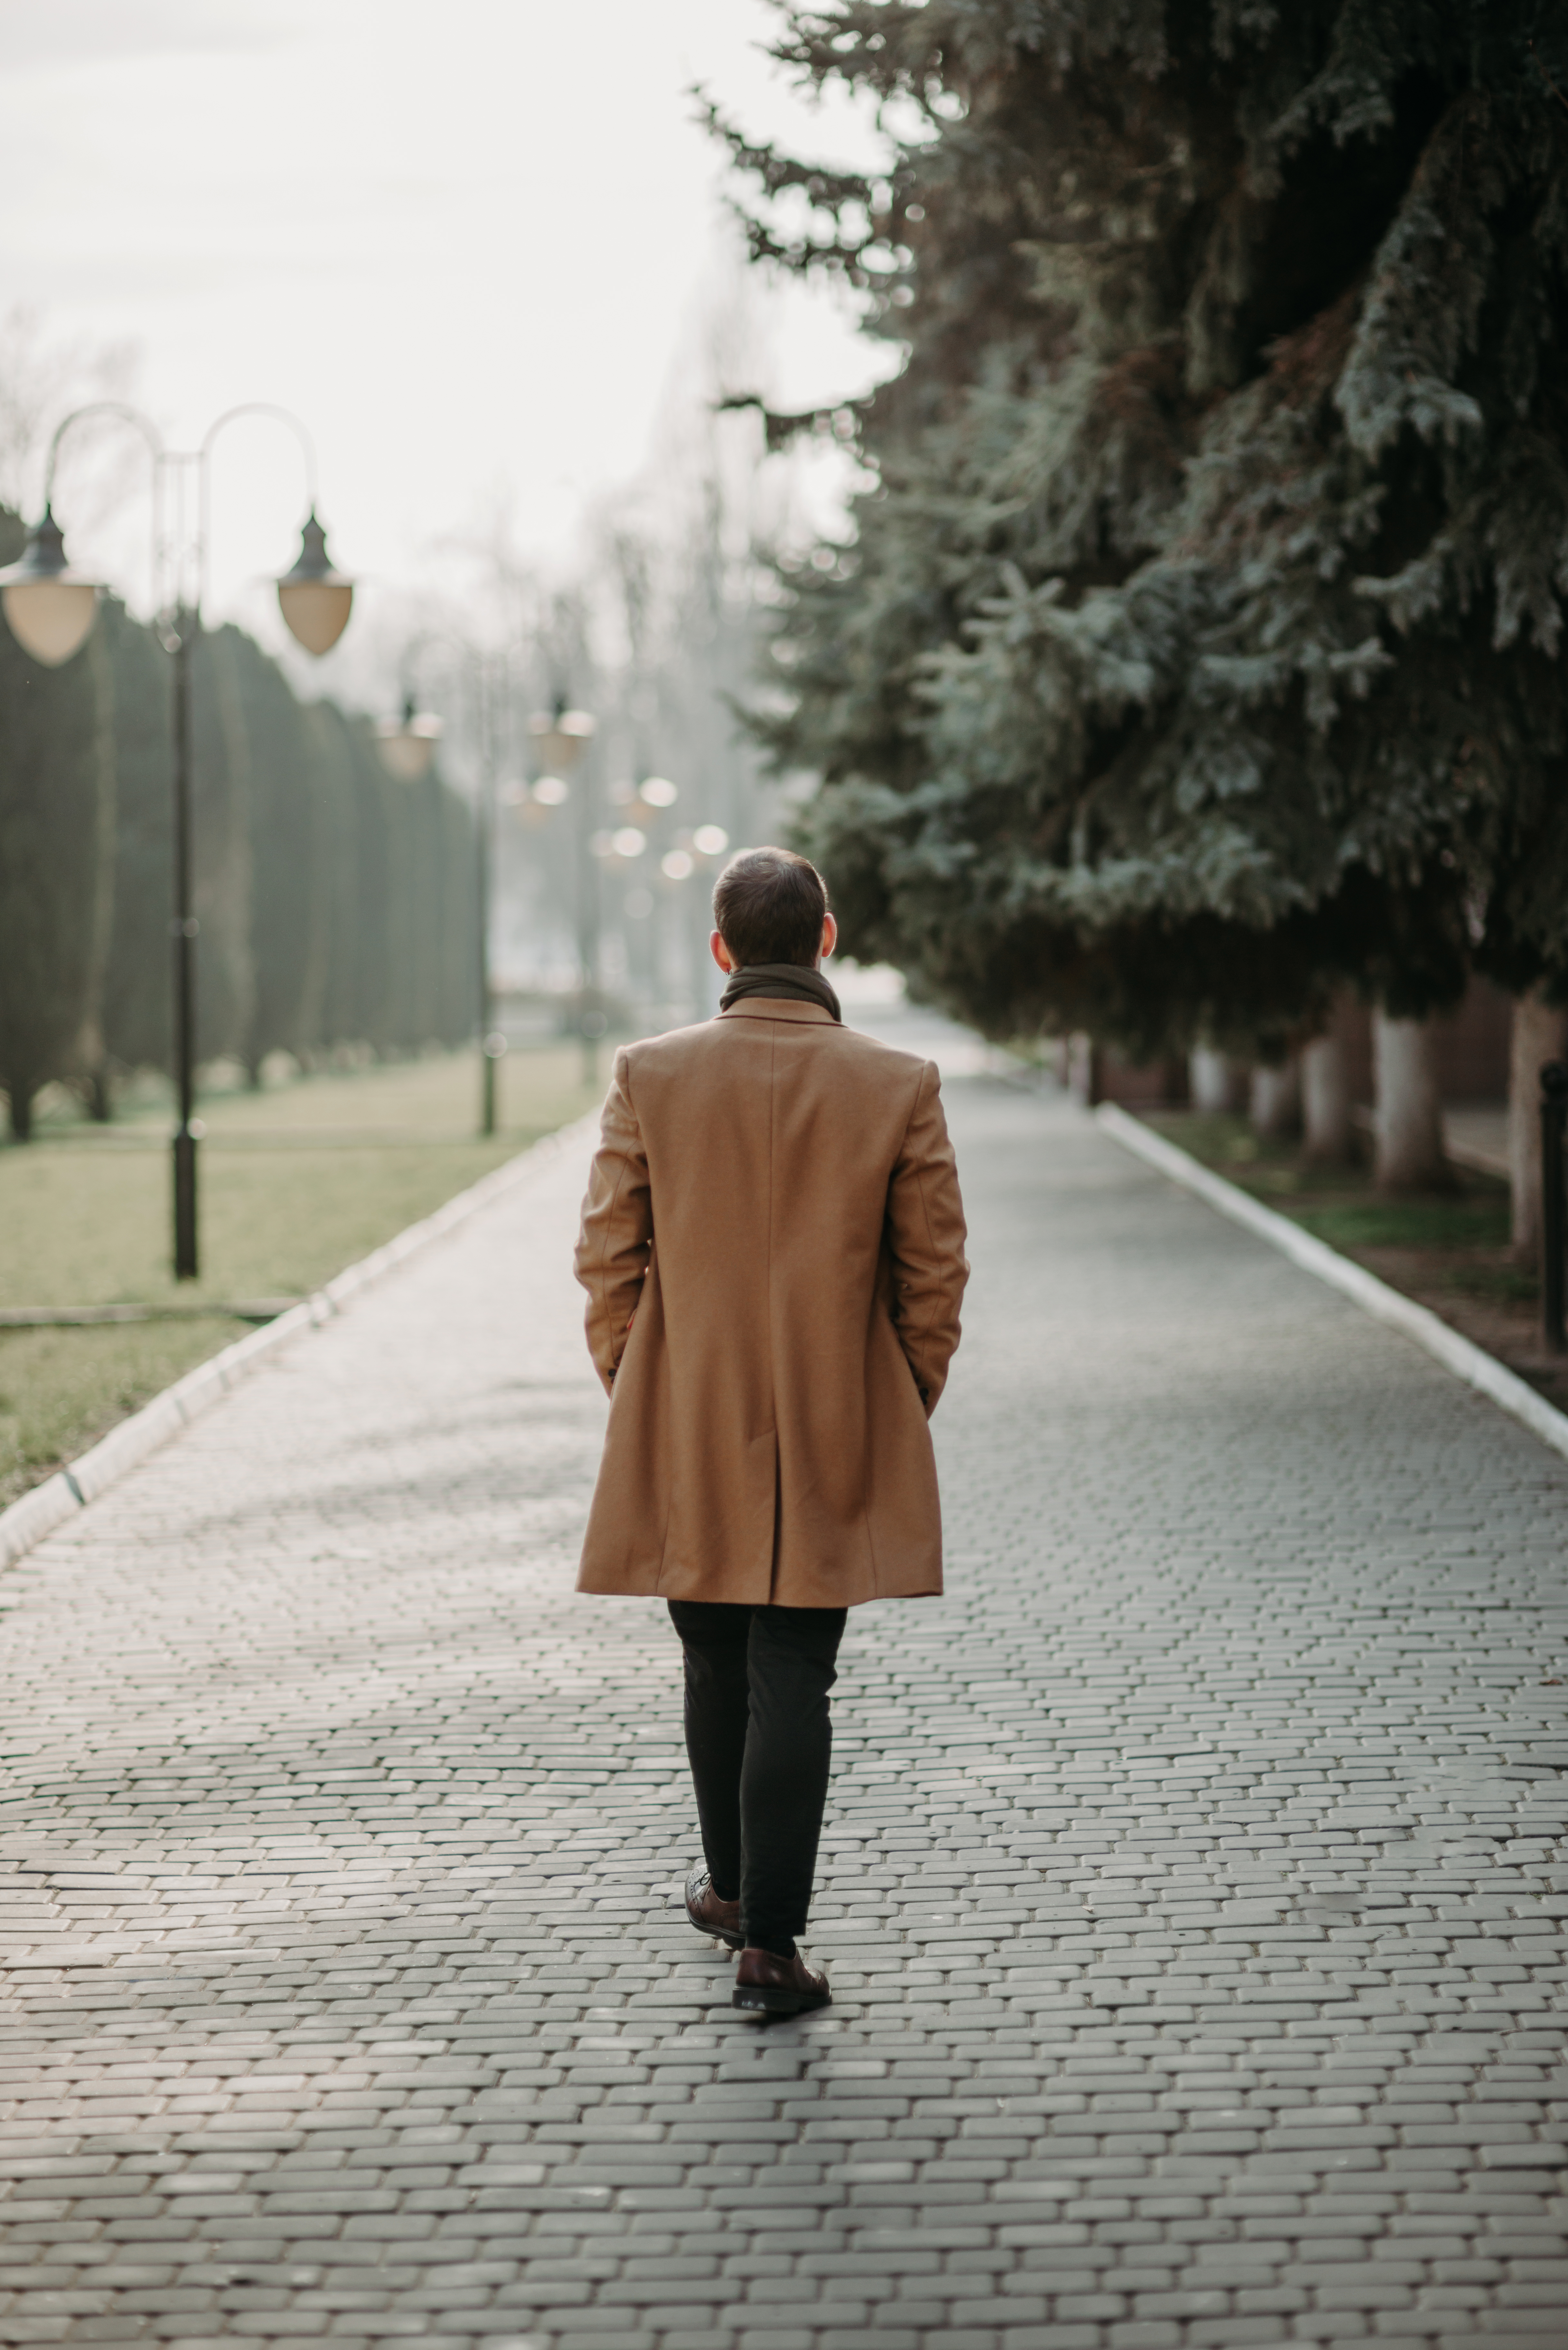 A man walking | Source: Shutterstock